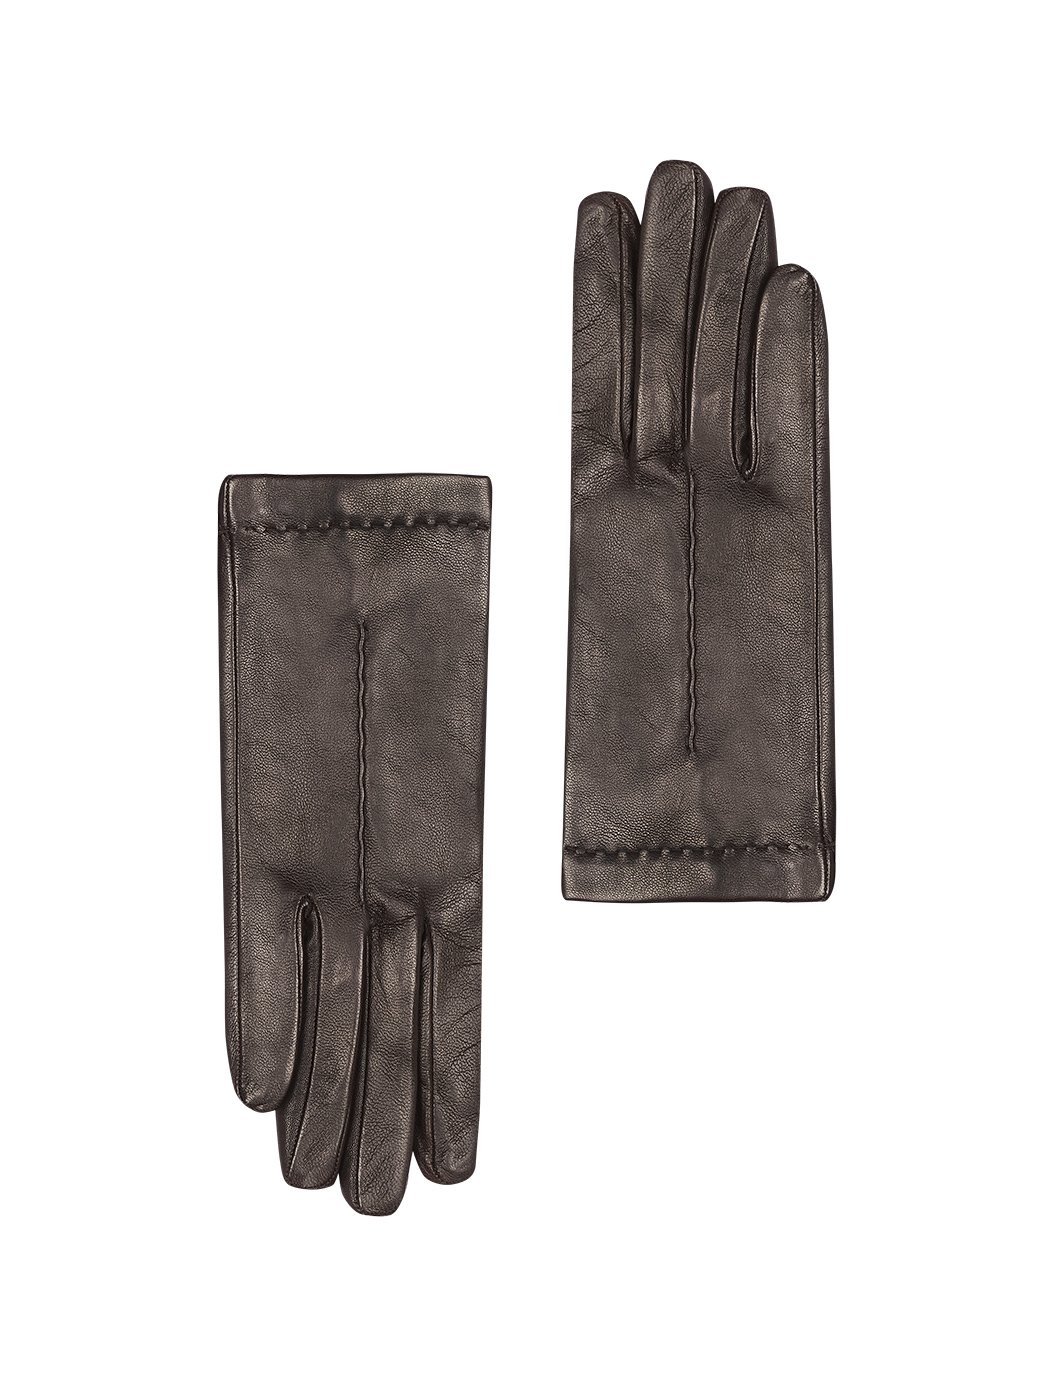 Women's Silk lined Gloves in Leather Dark Brown